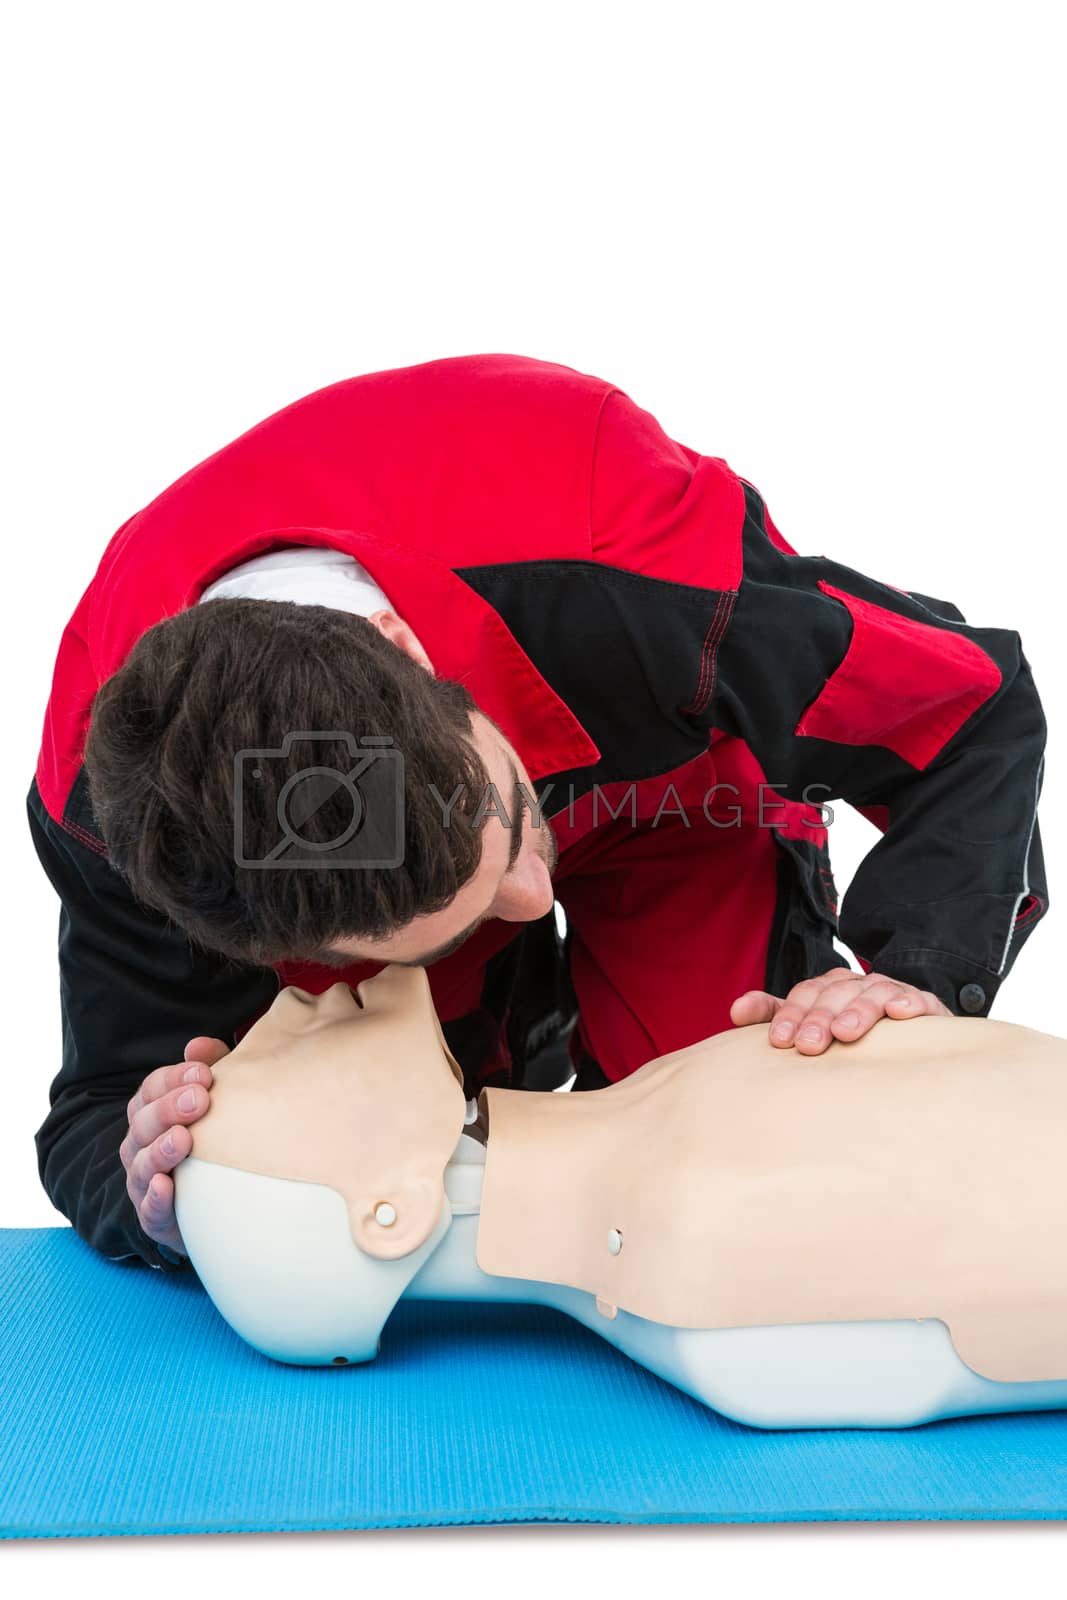 Royalty free image of Paramedic practising resuscitation on dummy by Wavebreakmedia